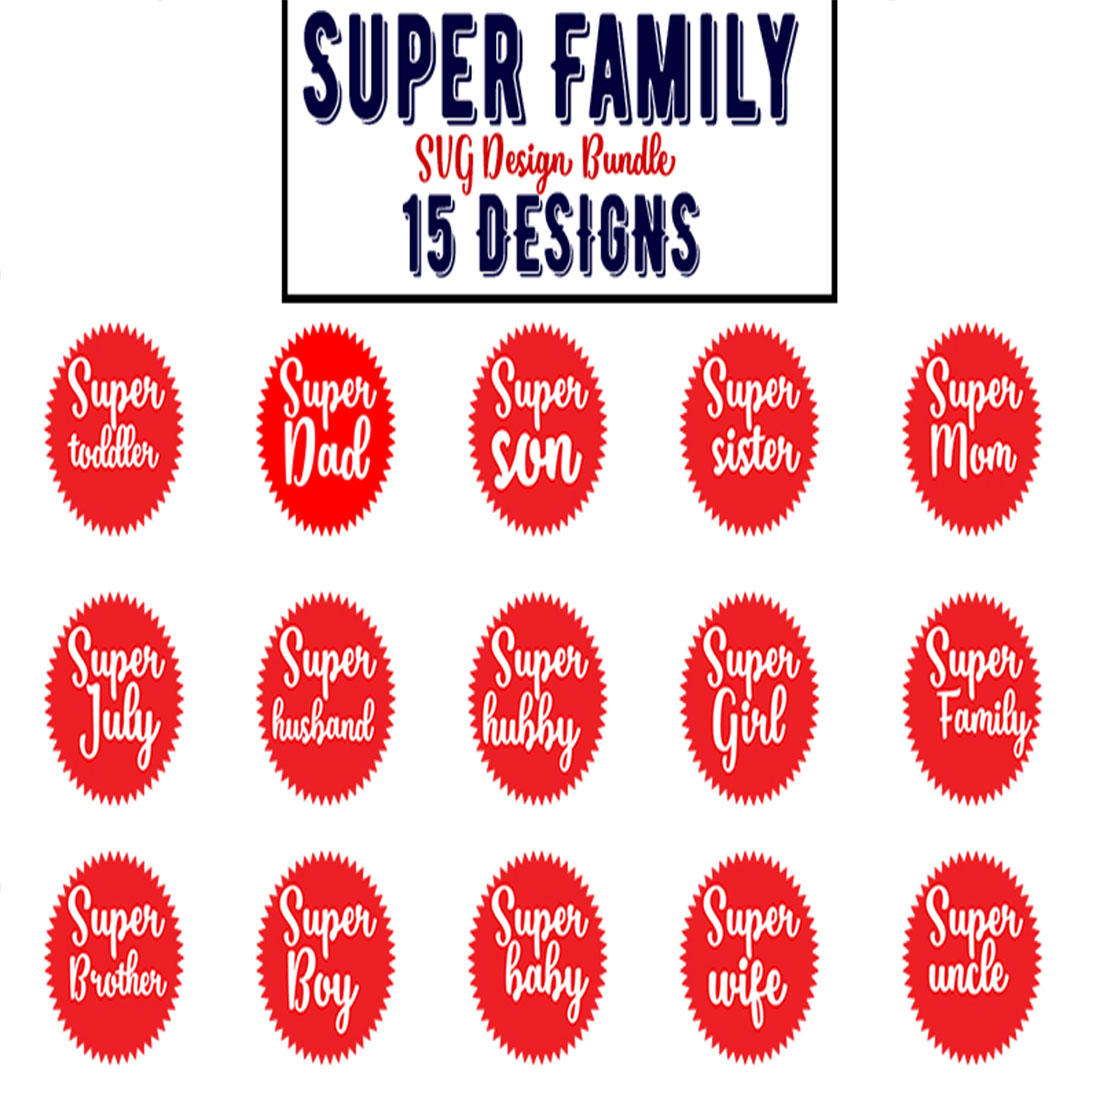 Super Family SVG Bundle cover image.